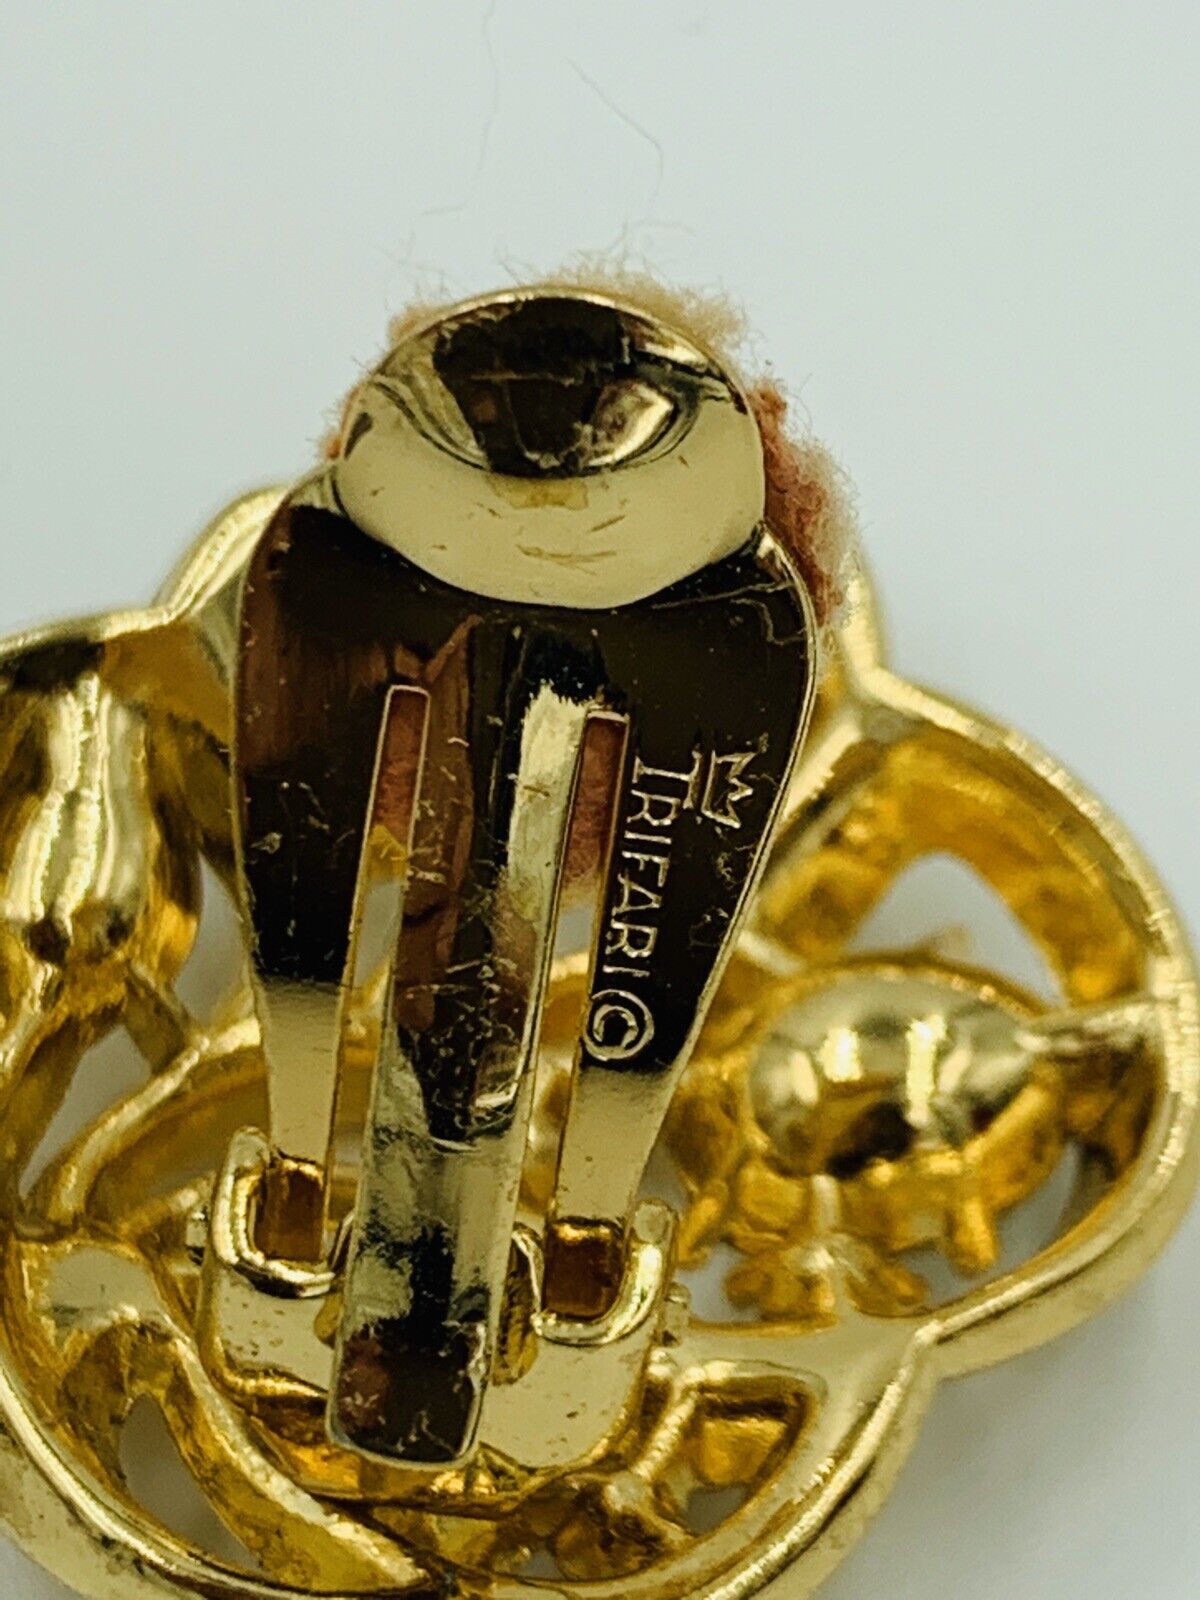 Crown Trifari Gold Toned Crystal Clip On Earrings